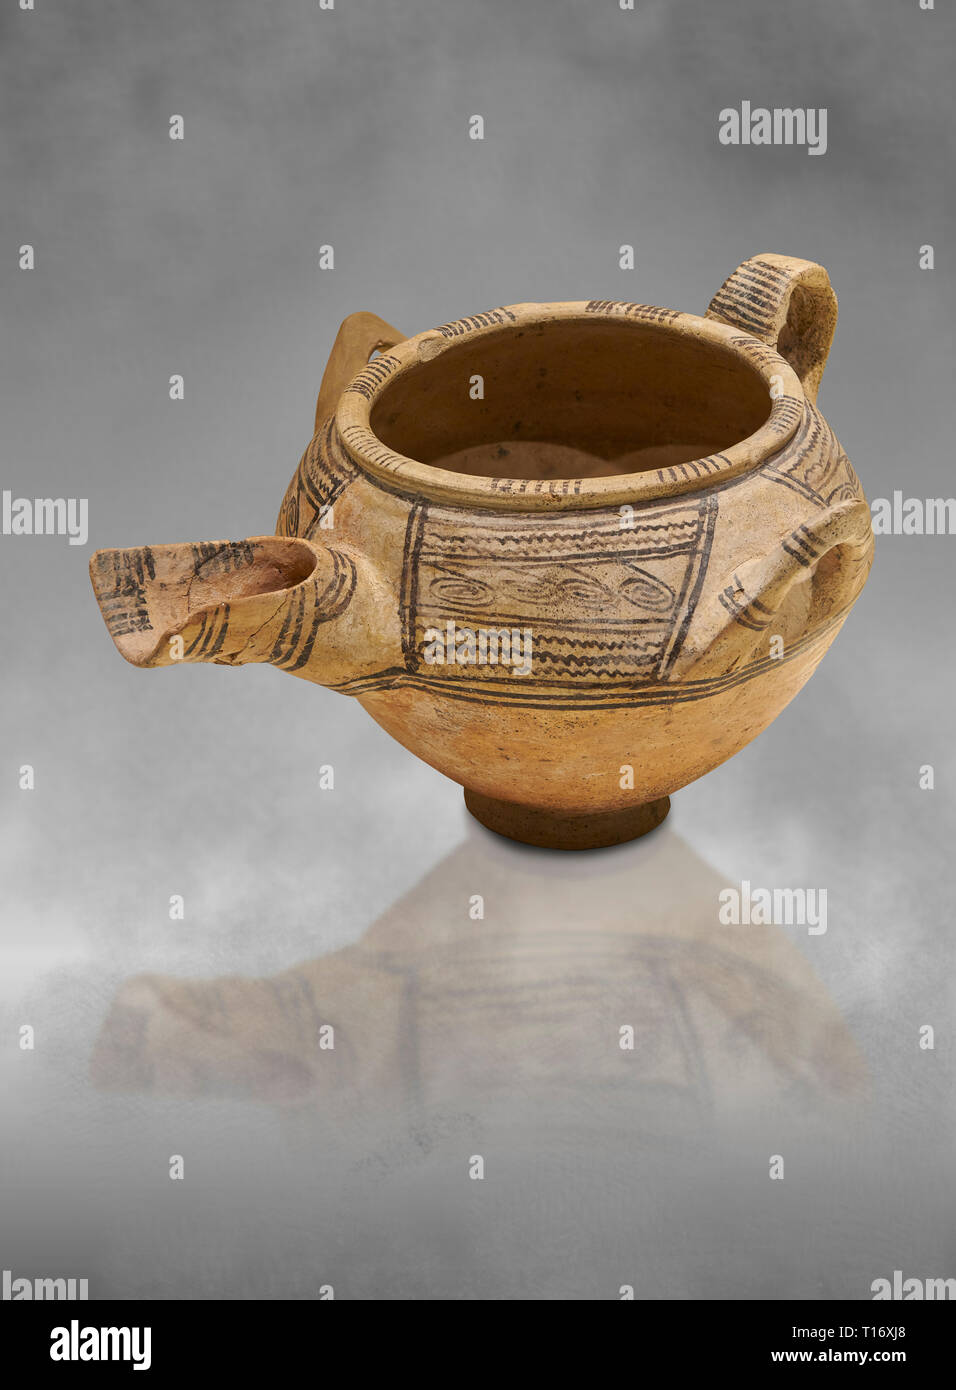 Decorated terra cotta tree handled vessel with a spout - 19th to 17th century BC - Kültepe Kanesh - Museum of Anatolian Civilisations, Ankara, Turkey. Stock Photo